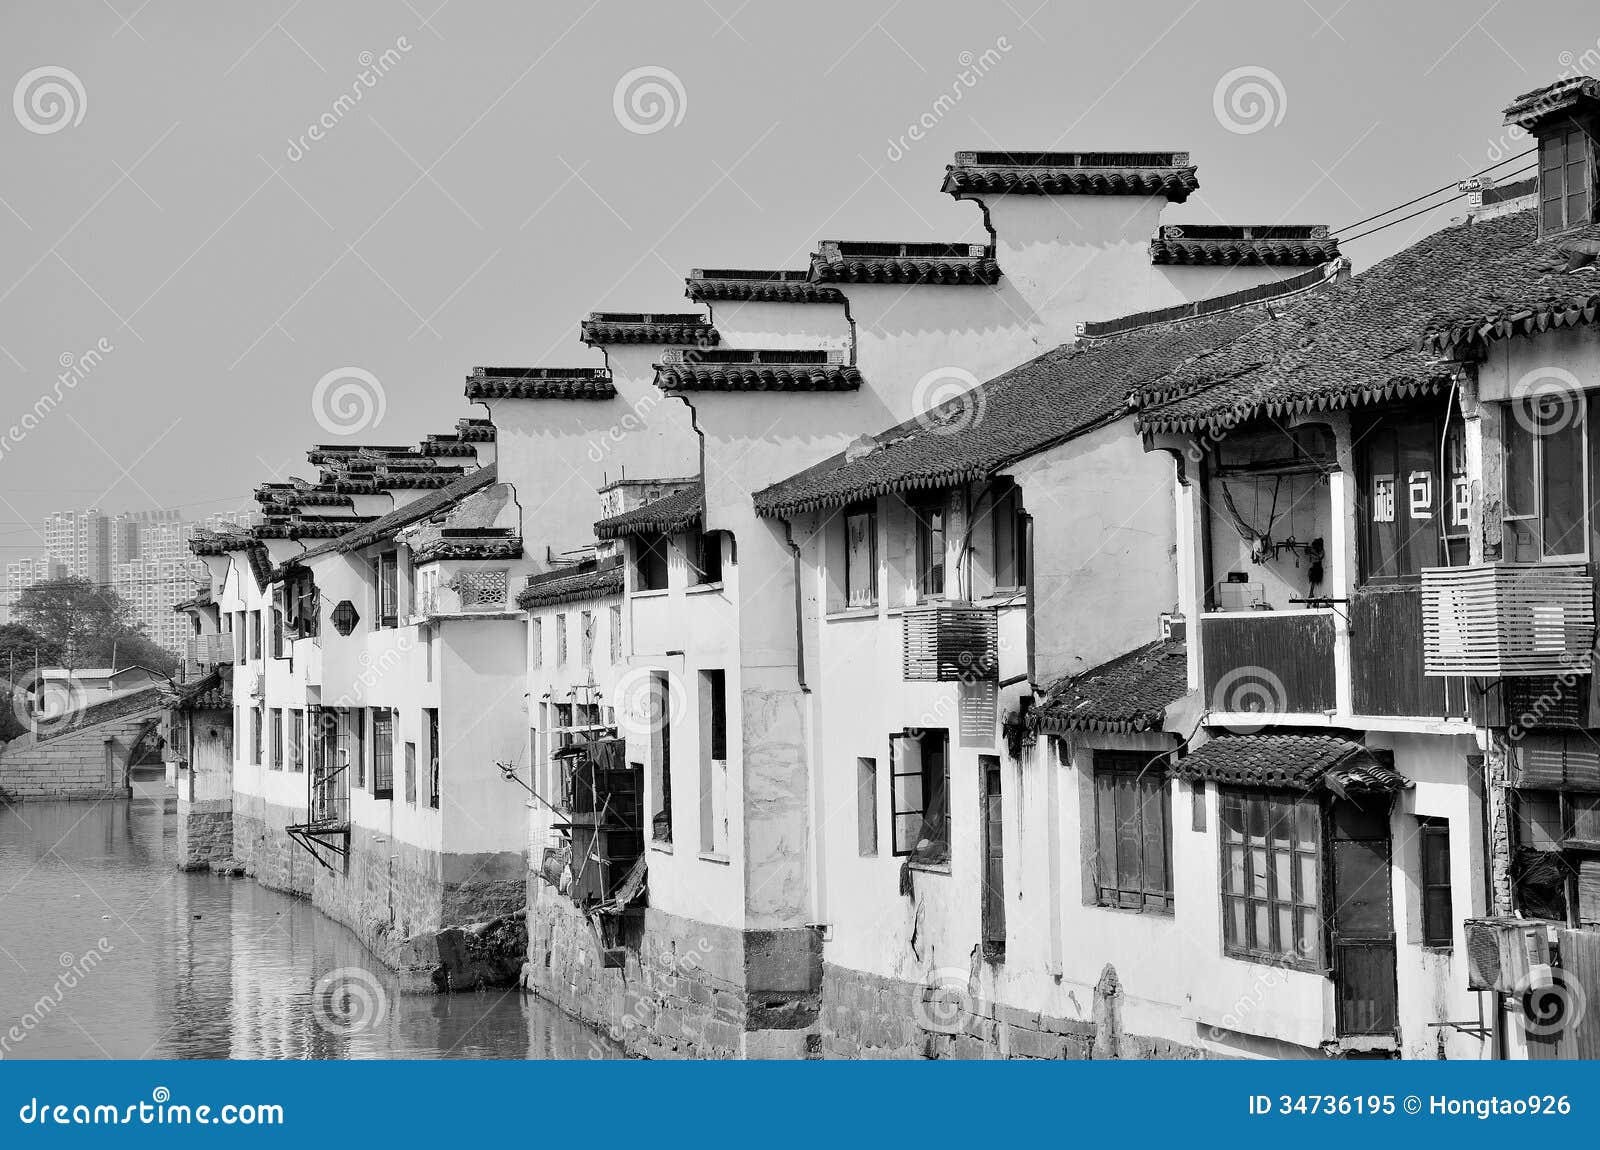 jiangnan ancient dwellings